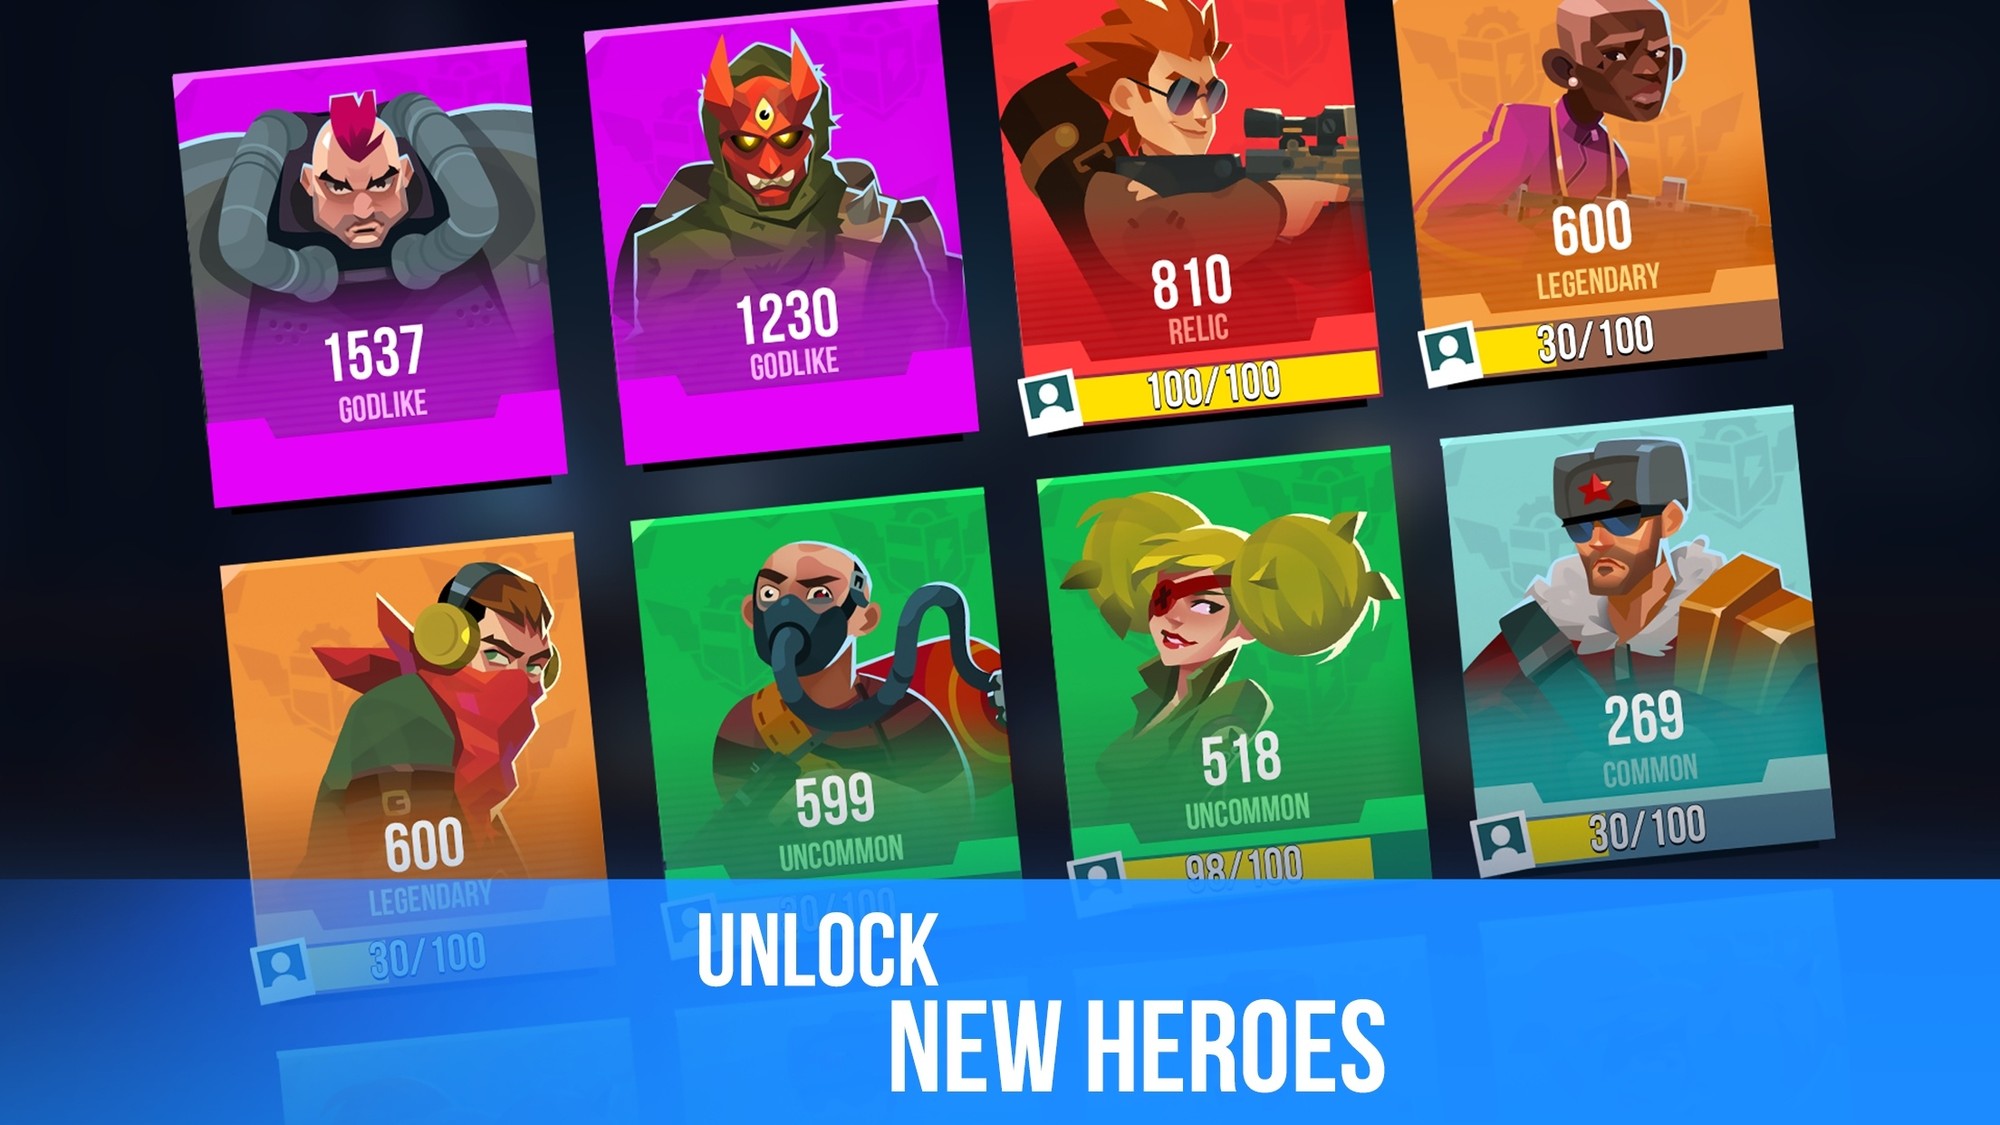 Unlock new heroes